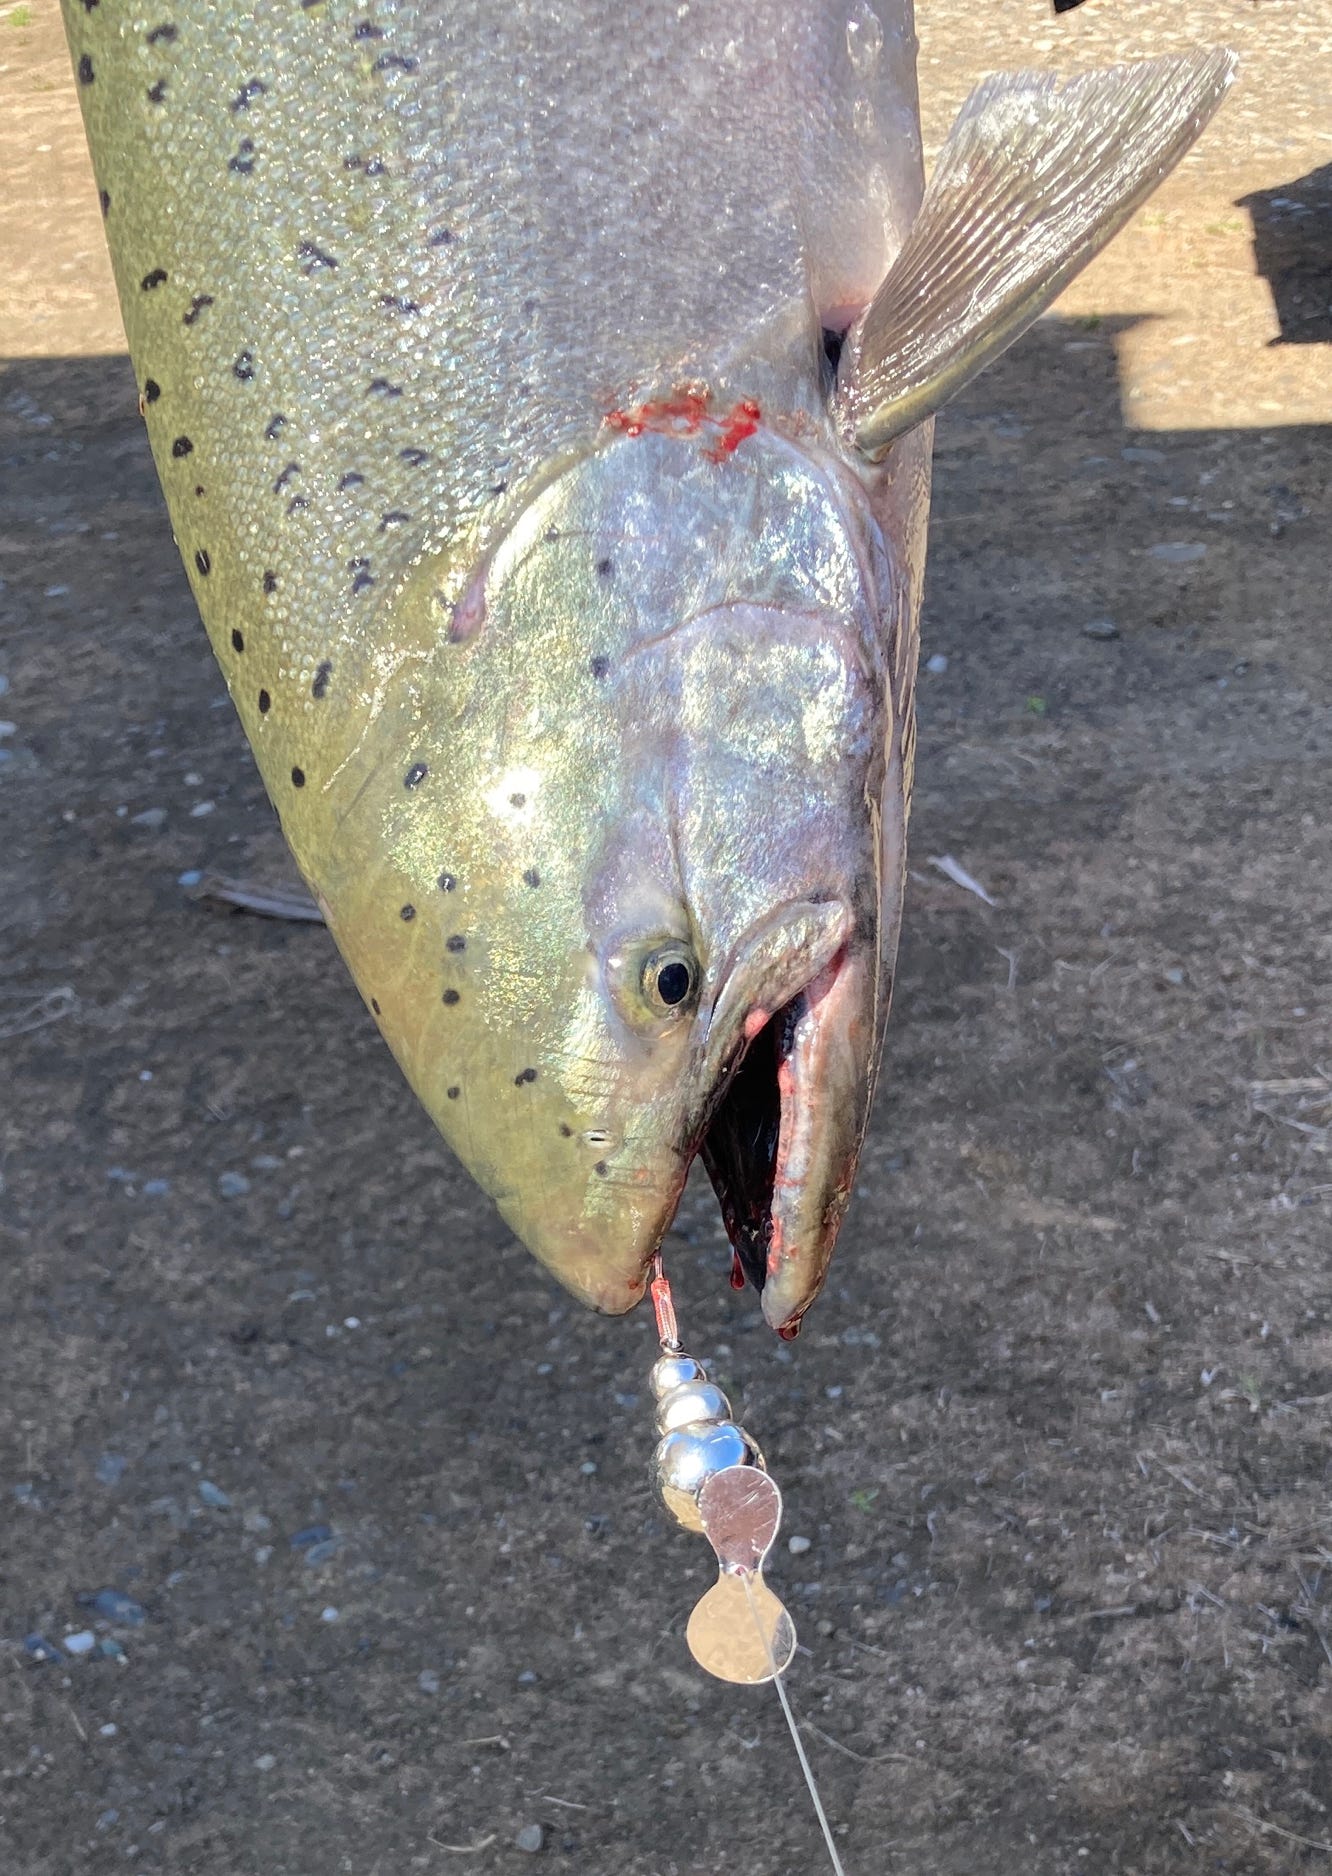 Kokanee Salmon Tackle, Fishing Hooks, Shrimp Lures, Baits